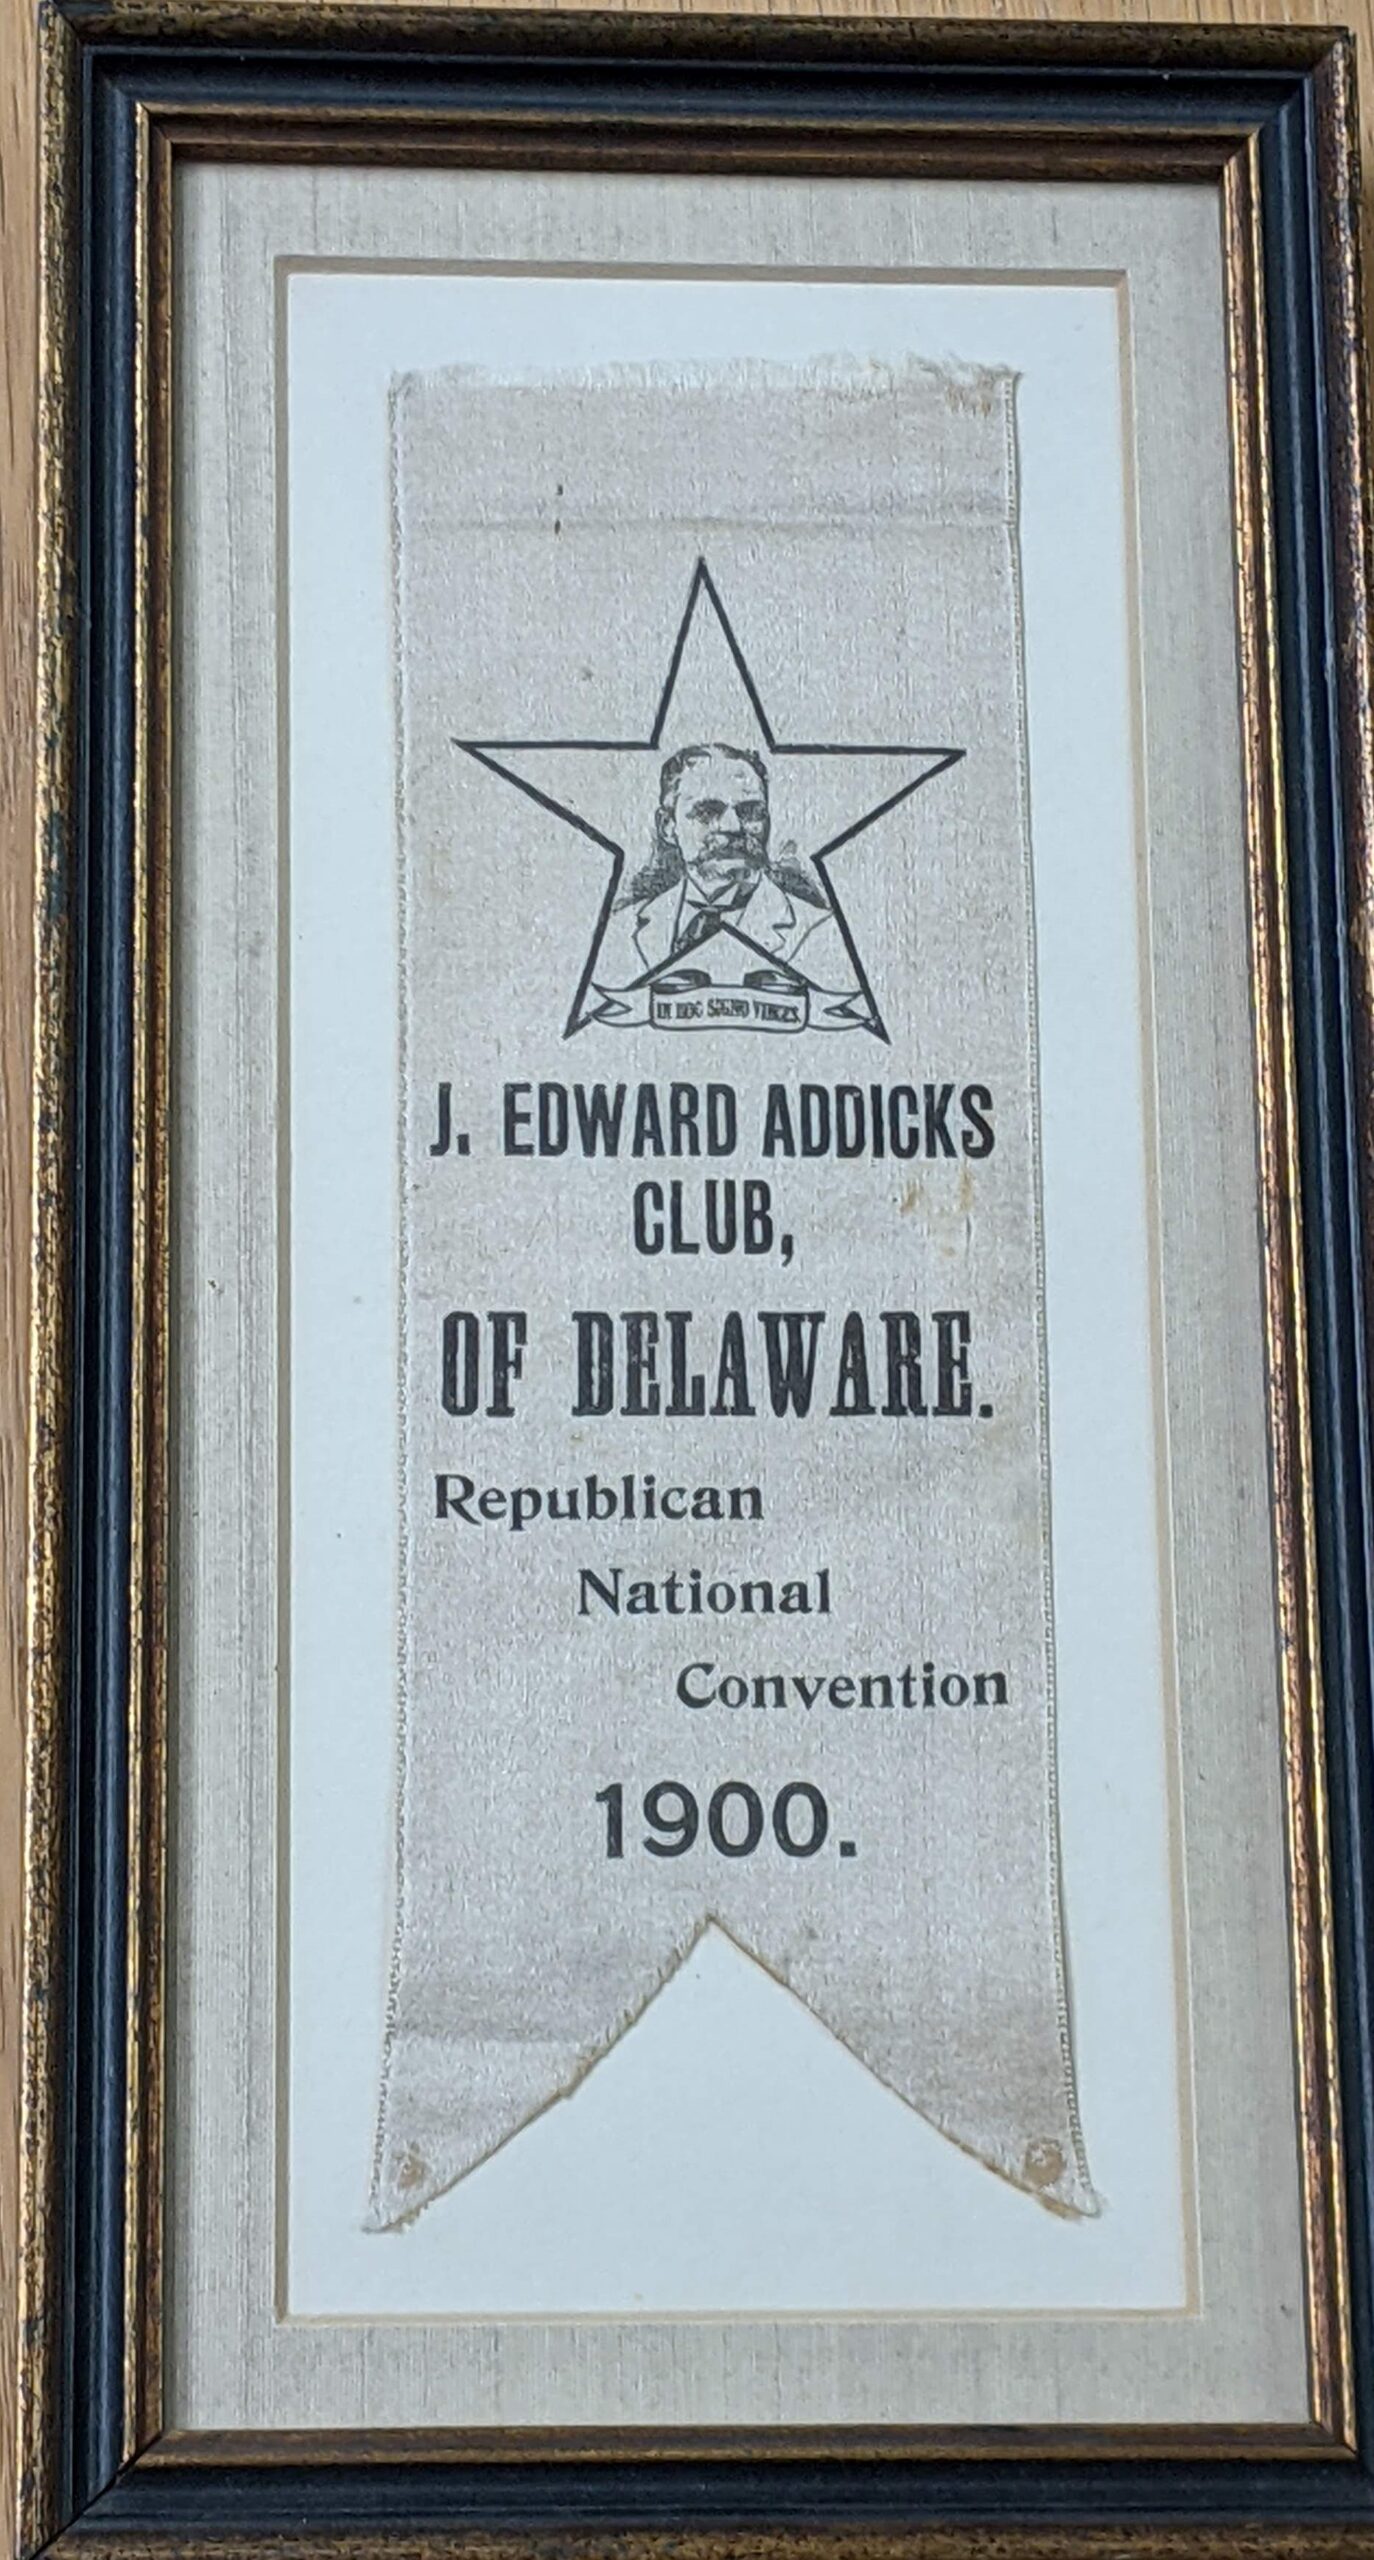 J. Edward Addicks Club of Delaware ribbon, 1900